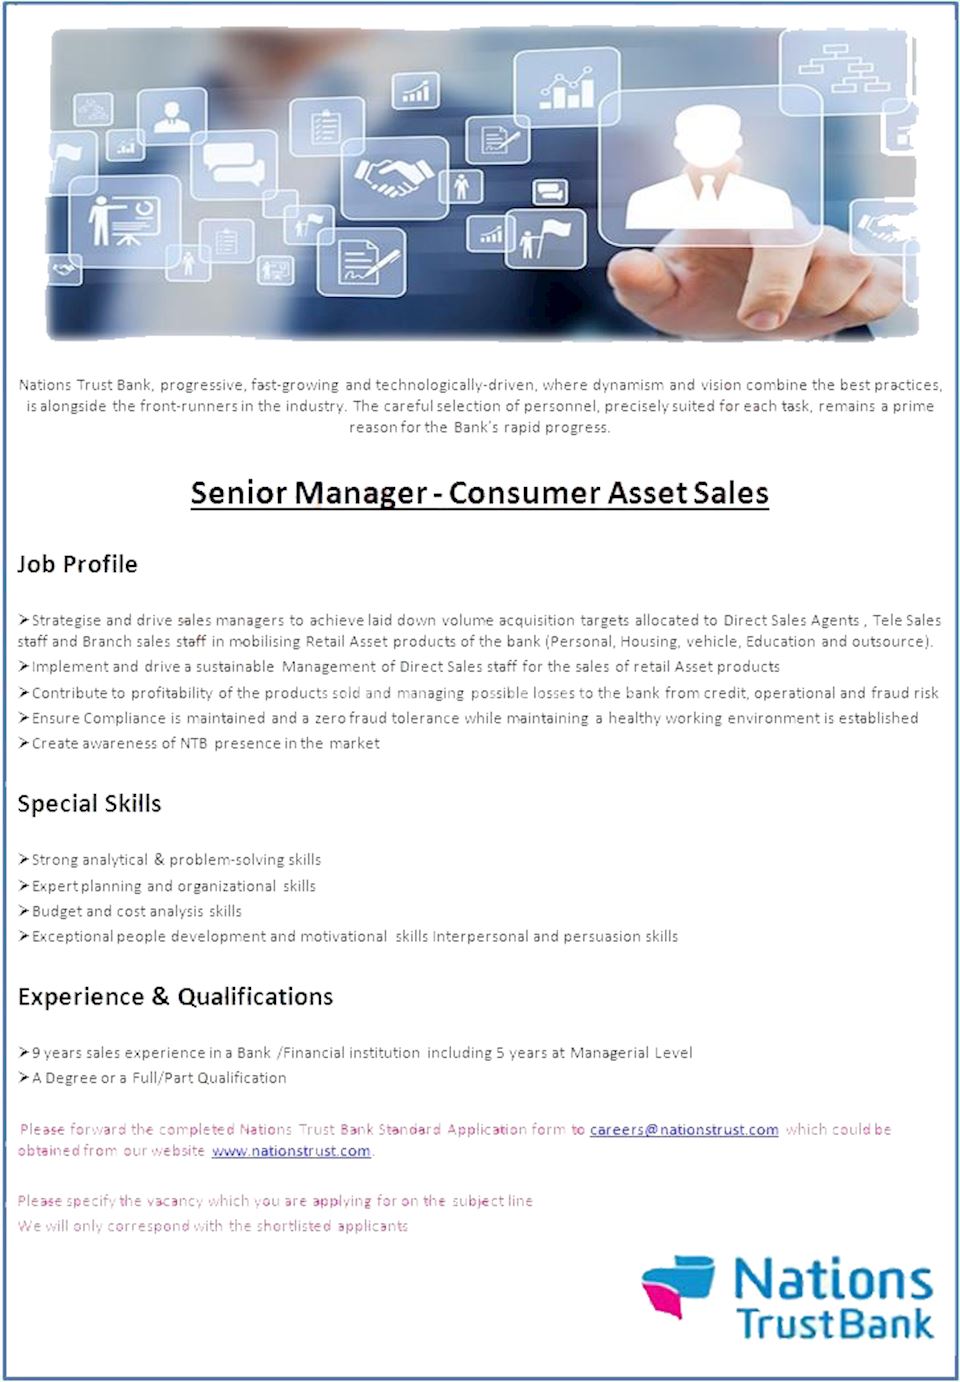 Senior Manager - Consumer Asset Sales